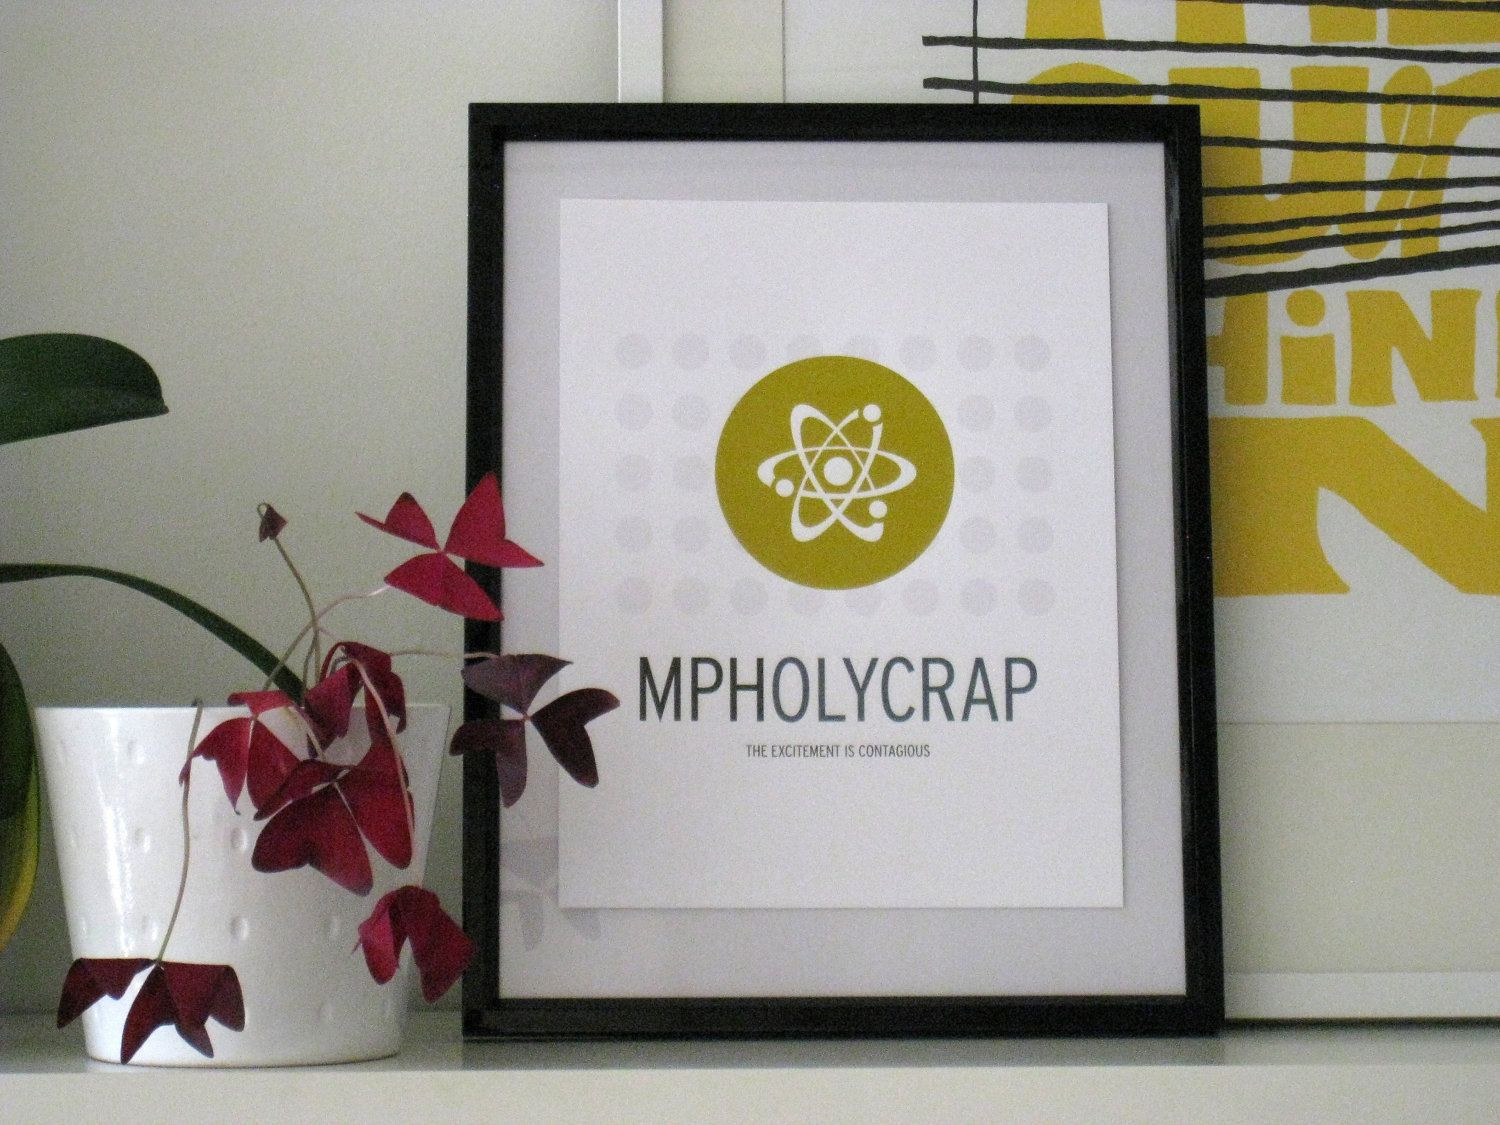 Bachelor Degree Graduation Gift Ideas
 Headline reads "MPHOLYCRAP" Message below reads "The